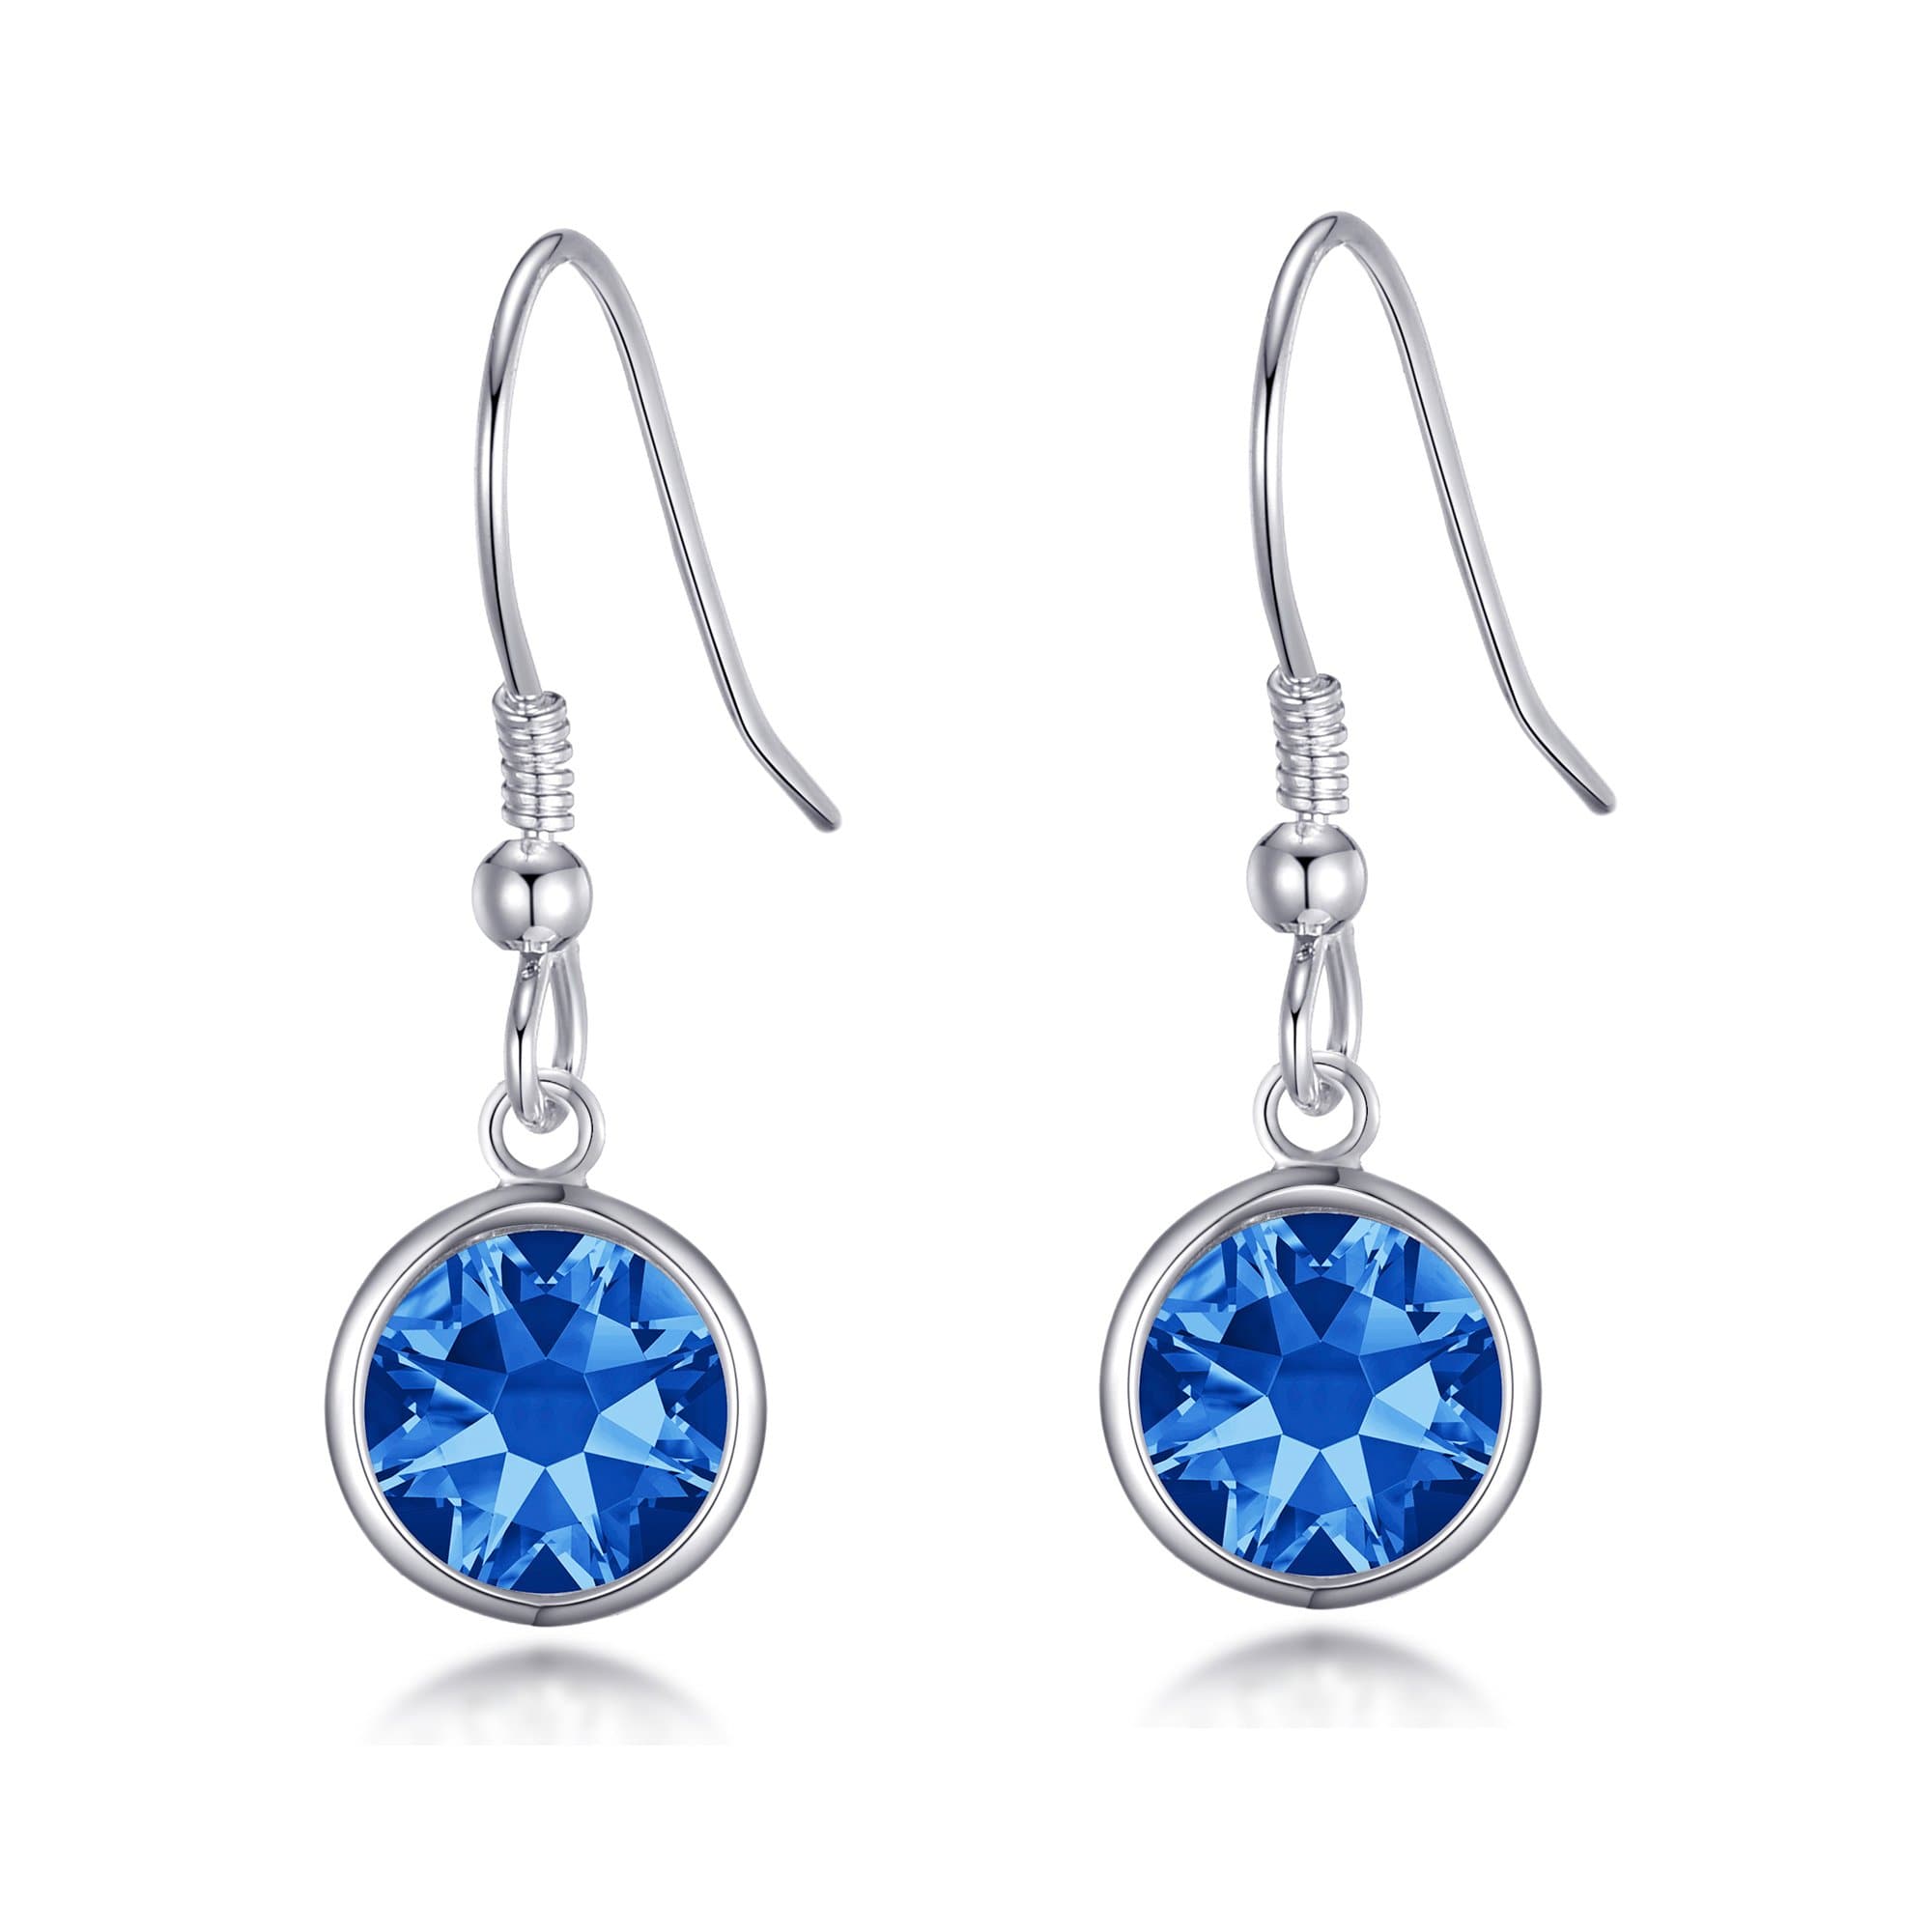 Dark Blue Crystal Drop Earrings Created with Zircondia® Crystals by Philip Jones Jewellery